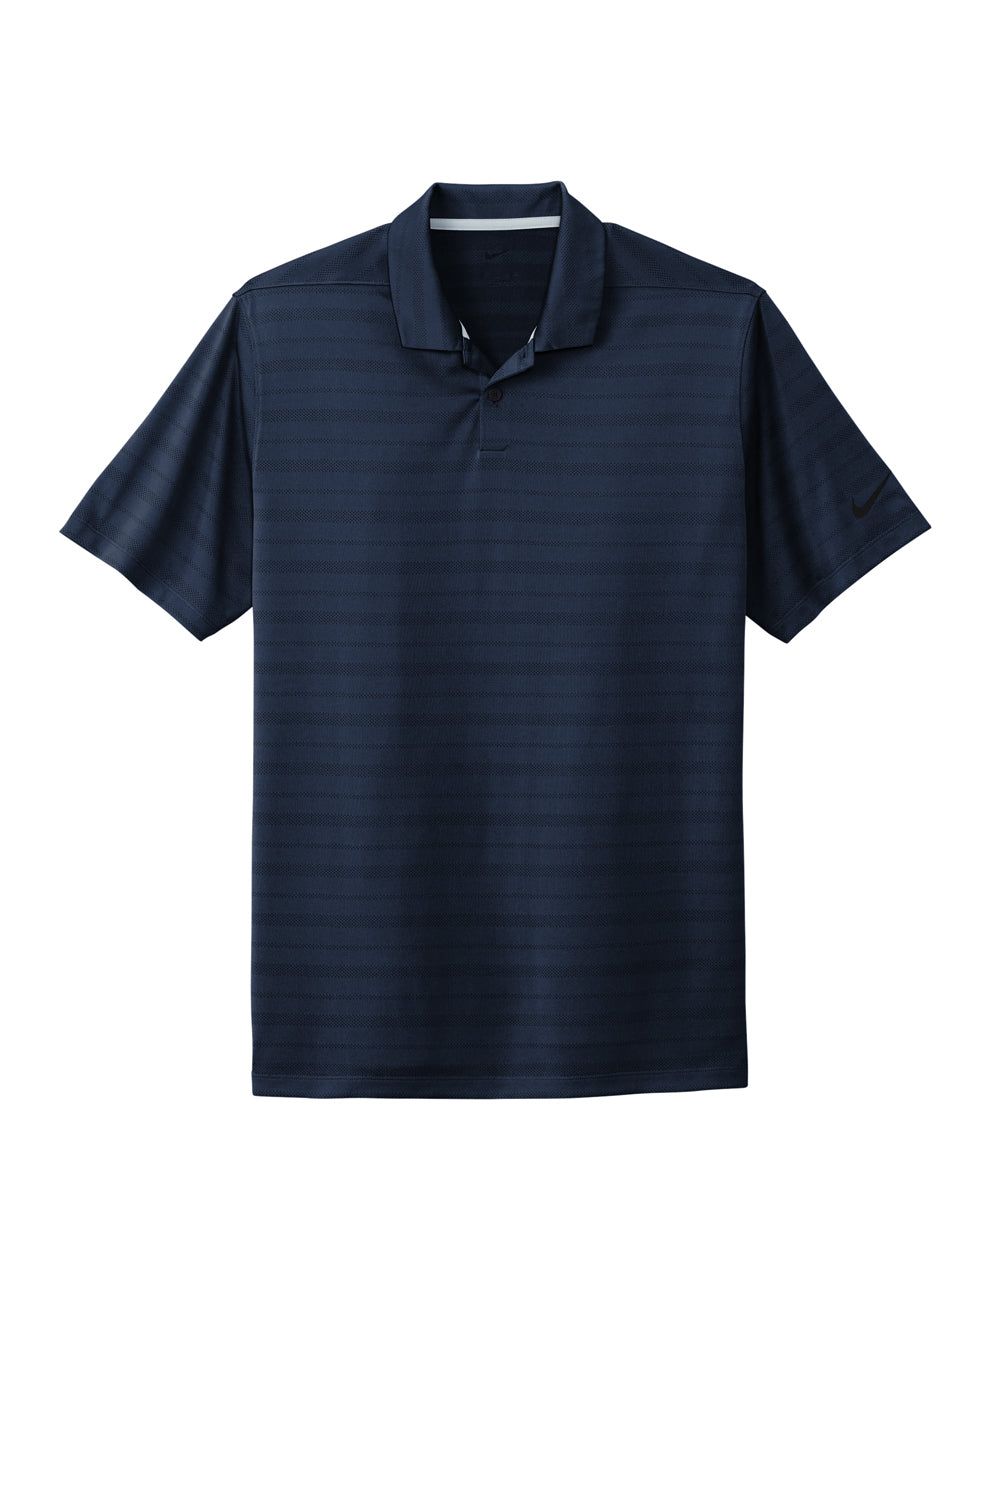 Nike NKDC2115 Mens Vapor Jacquard Dri-Fit Moisture Wicking Short Sleeve Polo Shirt Navy Blue Flat Front